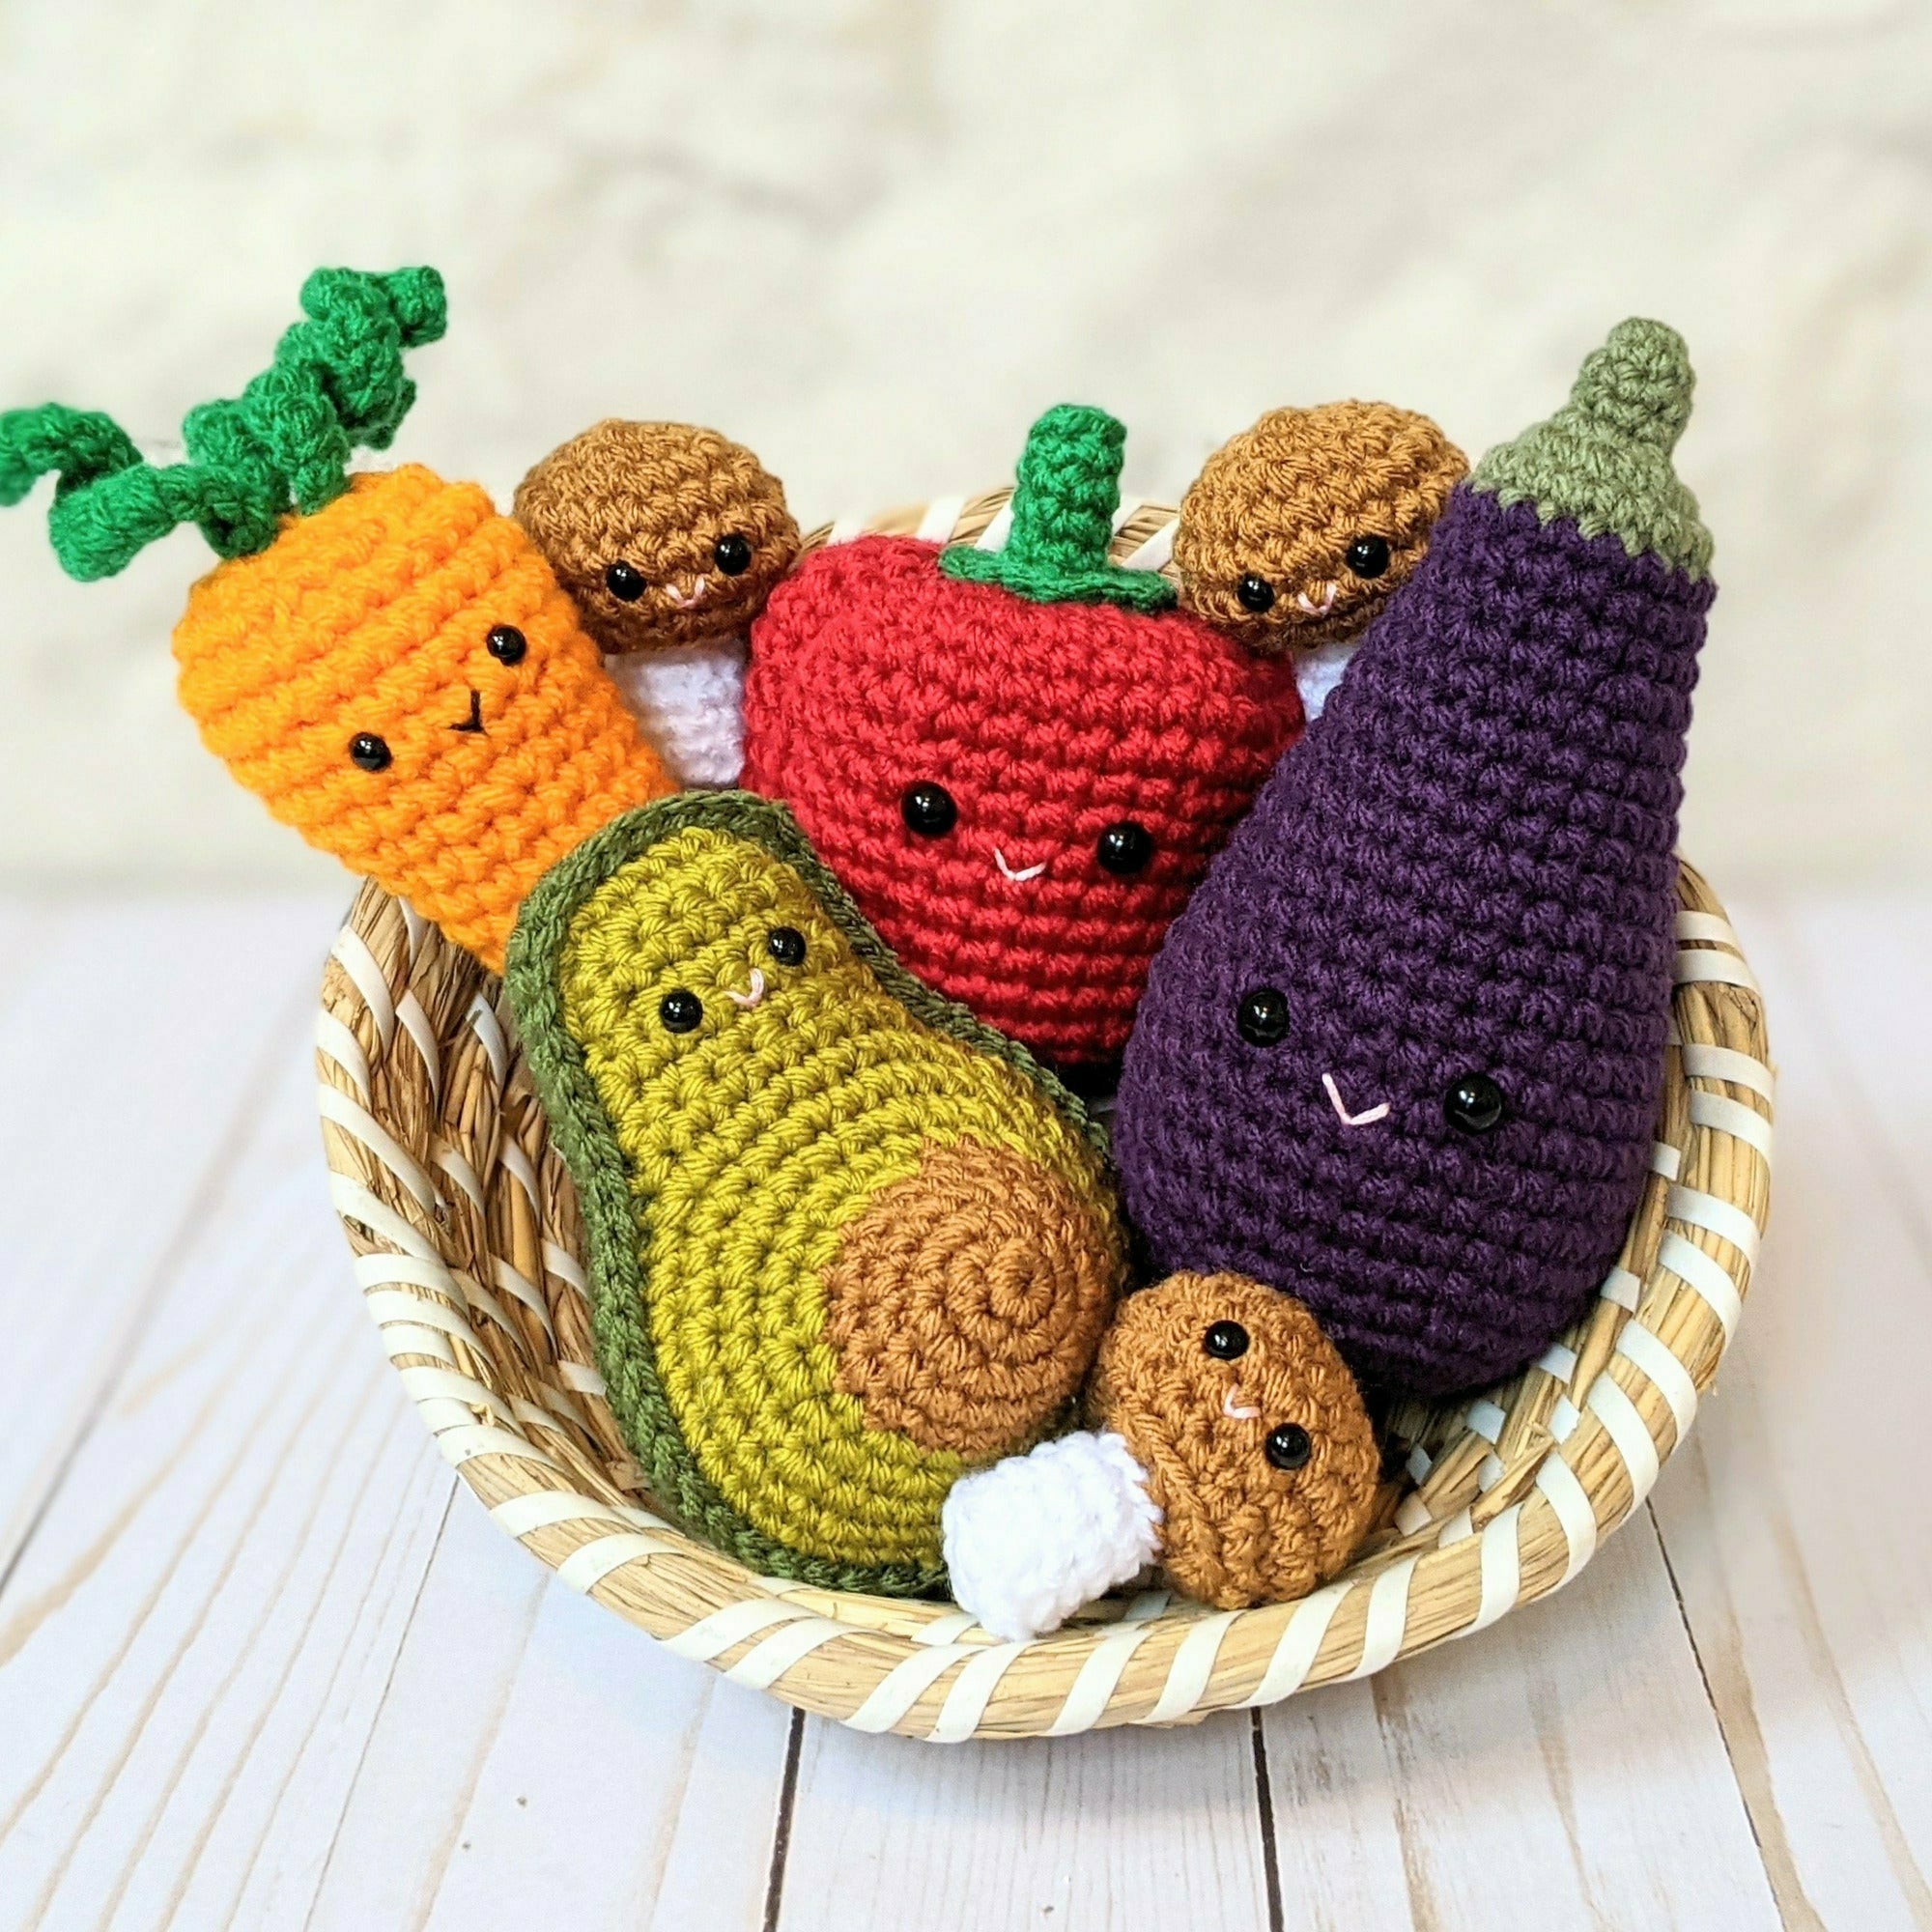 CROCHET PATTERN: Crochet Eggplant, Amigurumi Stuffed Food, Kawaii P